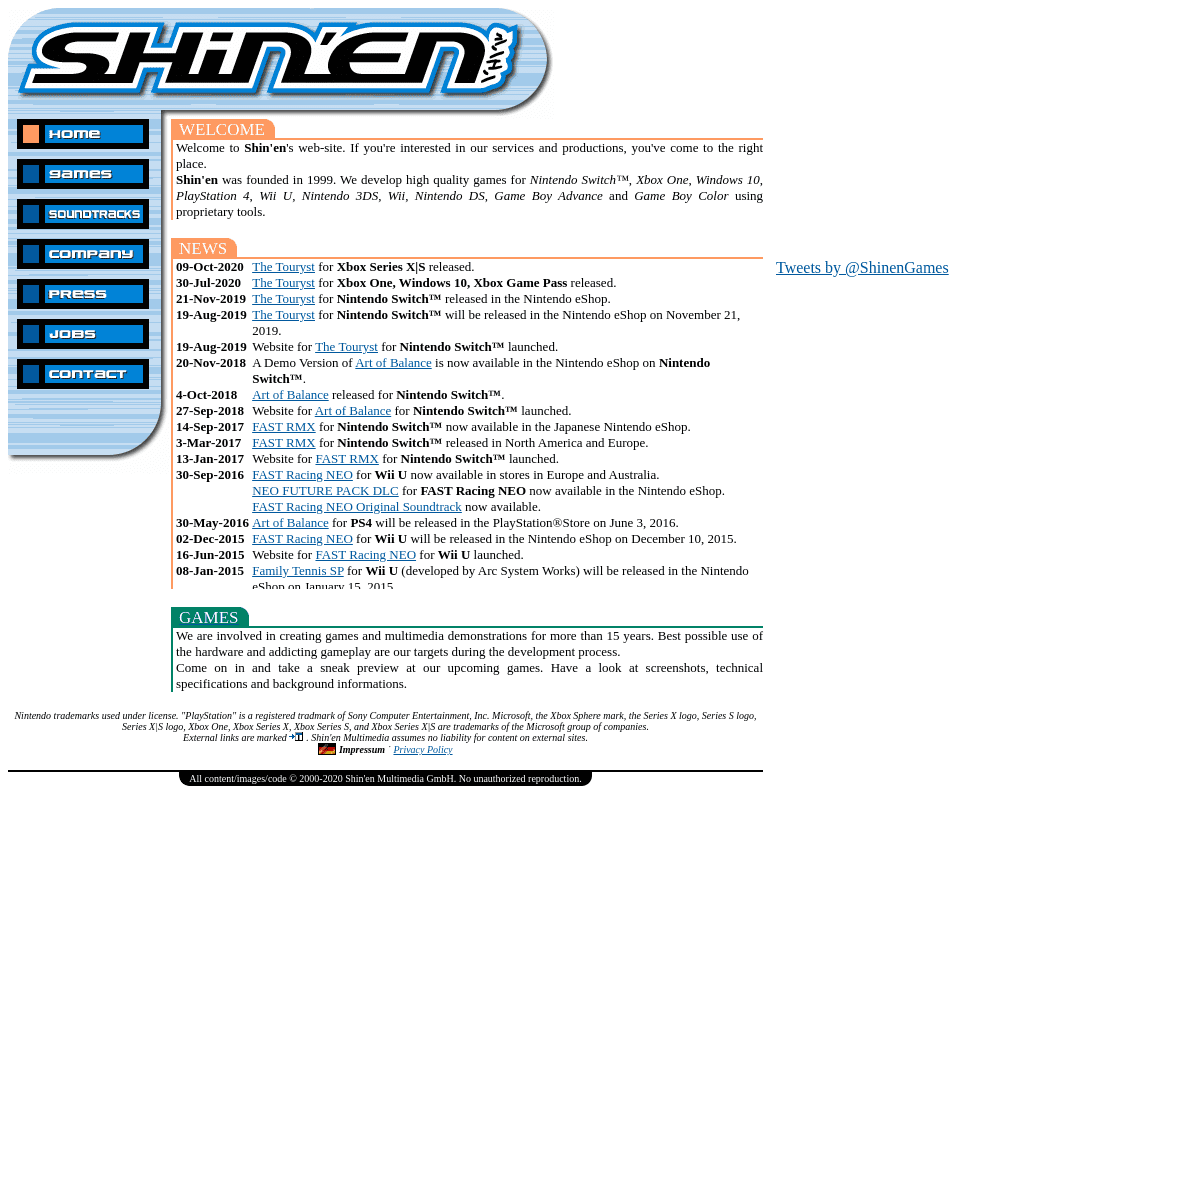 A complete backup of https://shinen.com